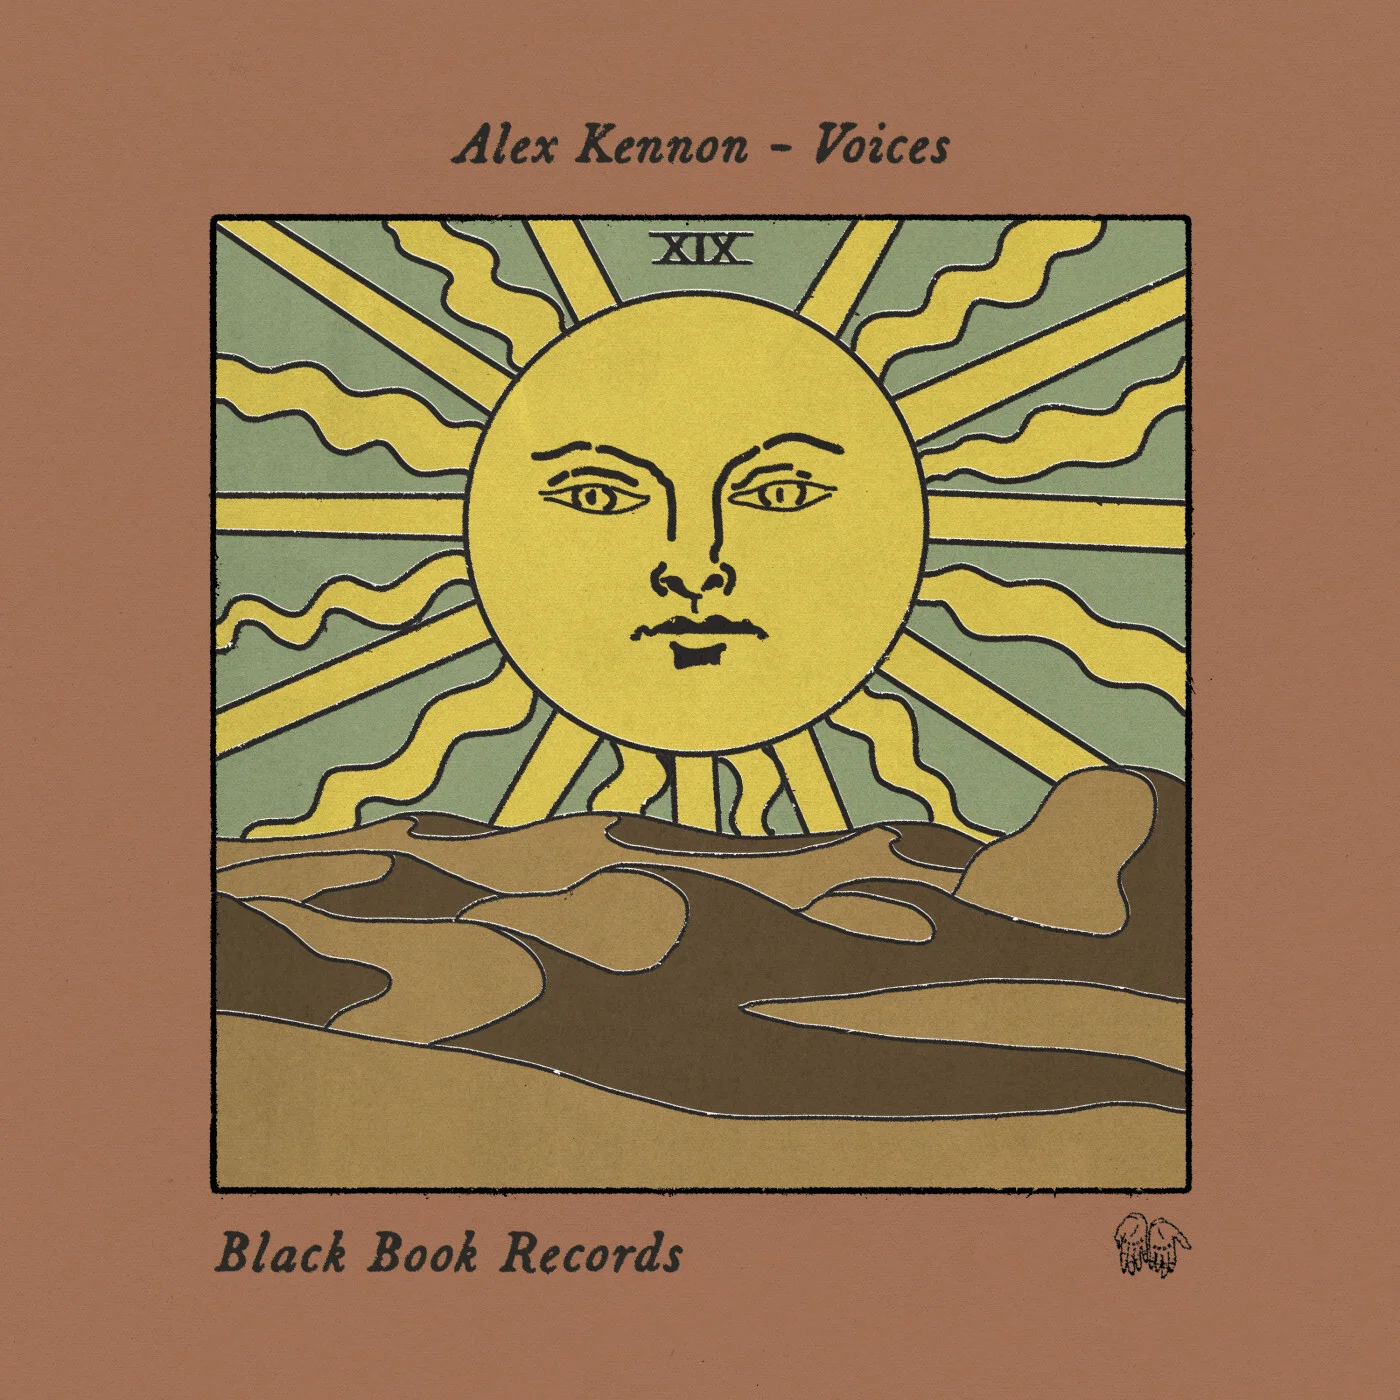 Alex Kennon — Voices cover artwork